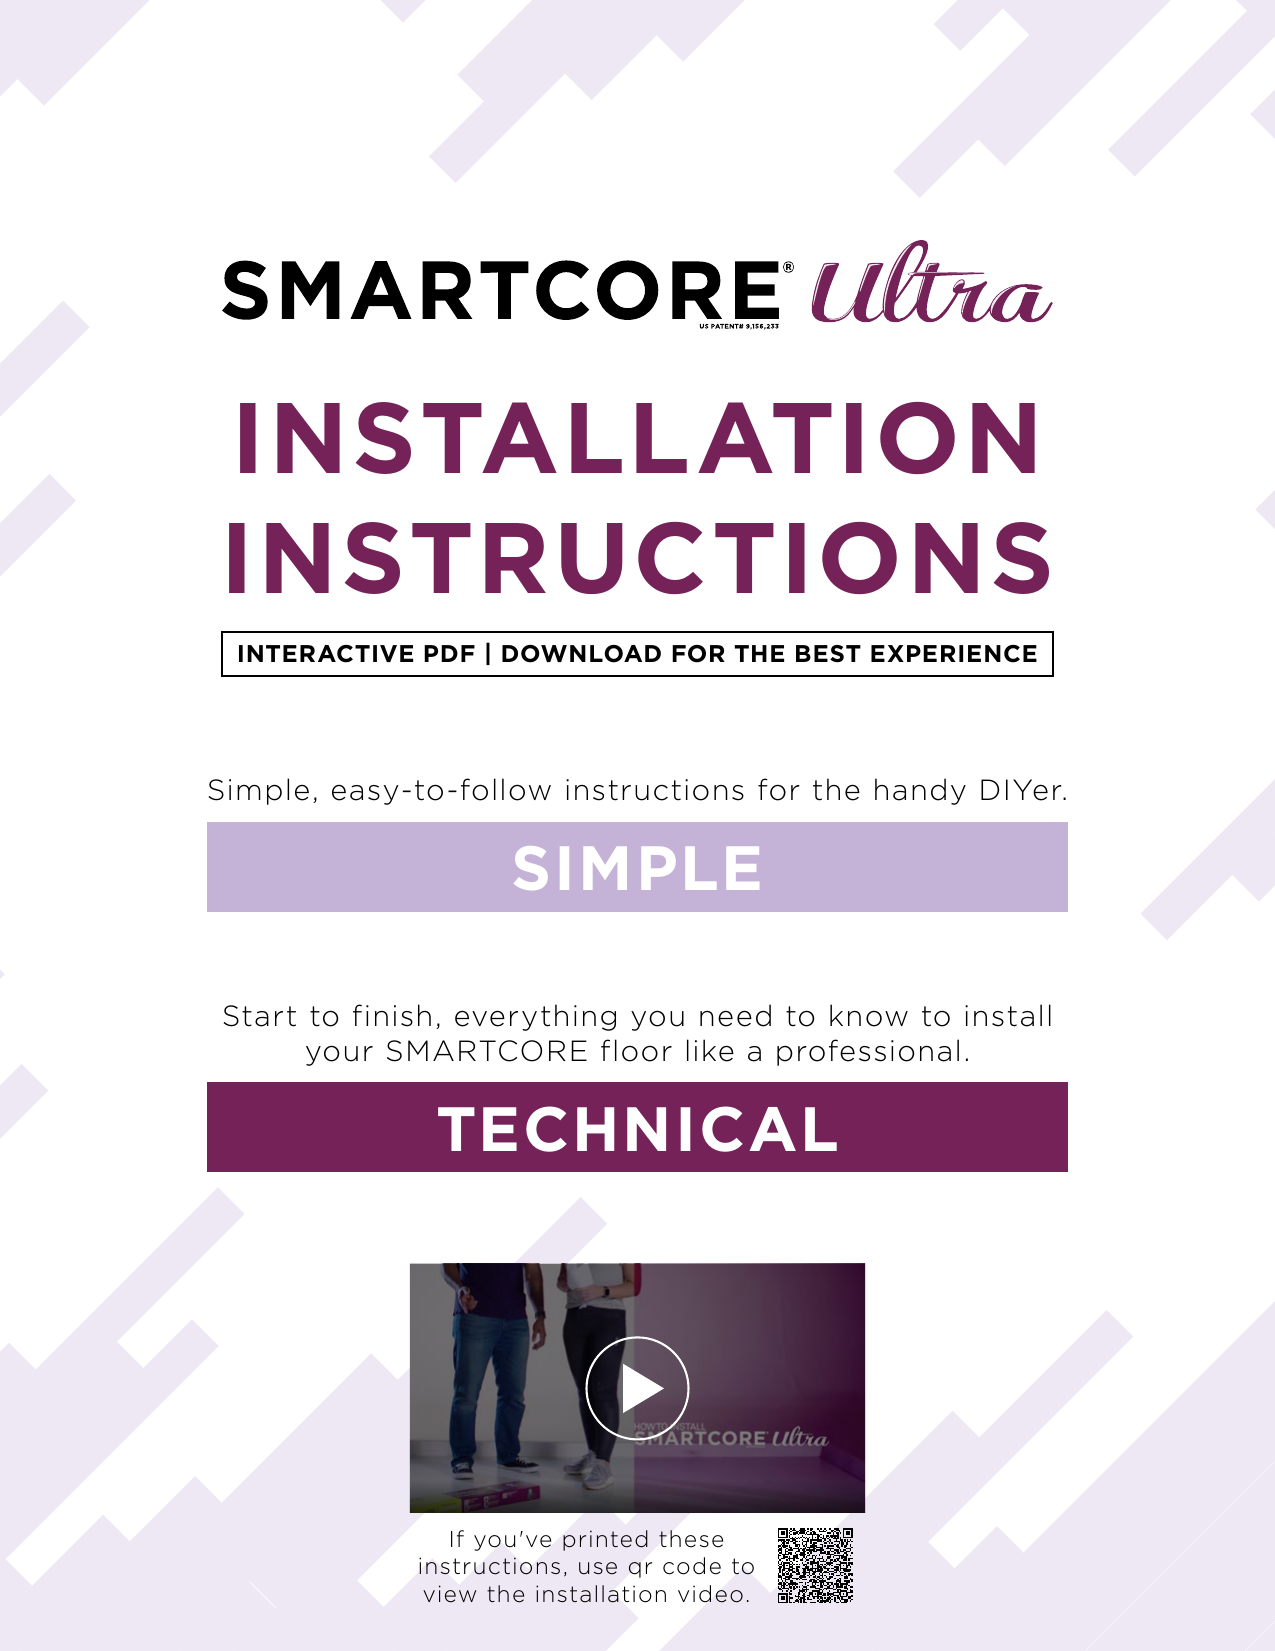 Smartcore Ultra Lx42002061 Wide